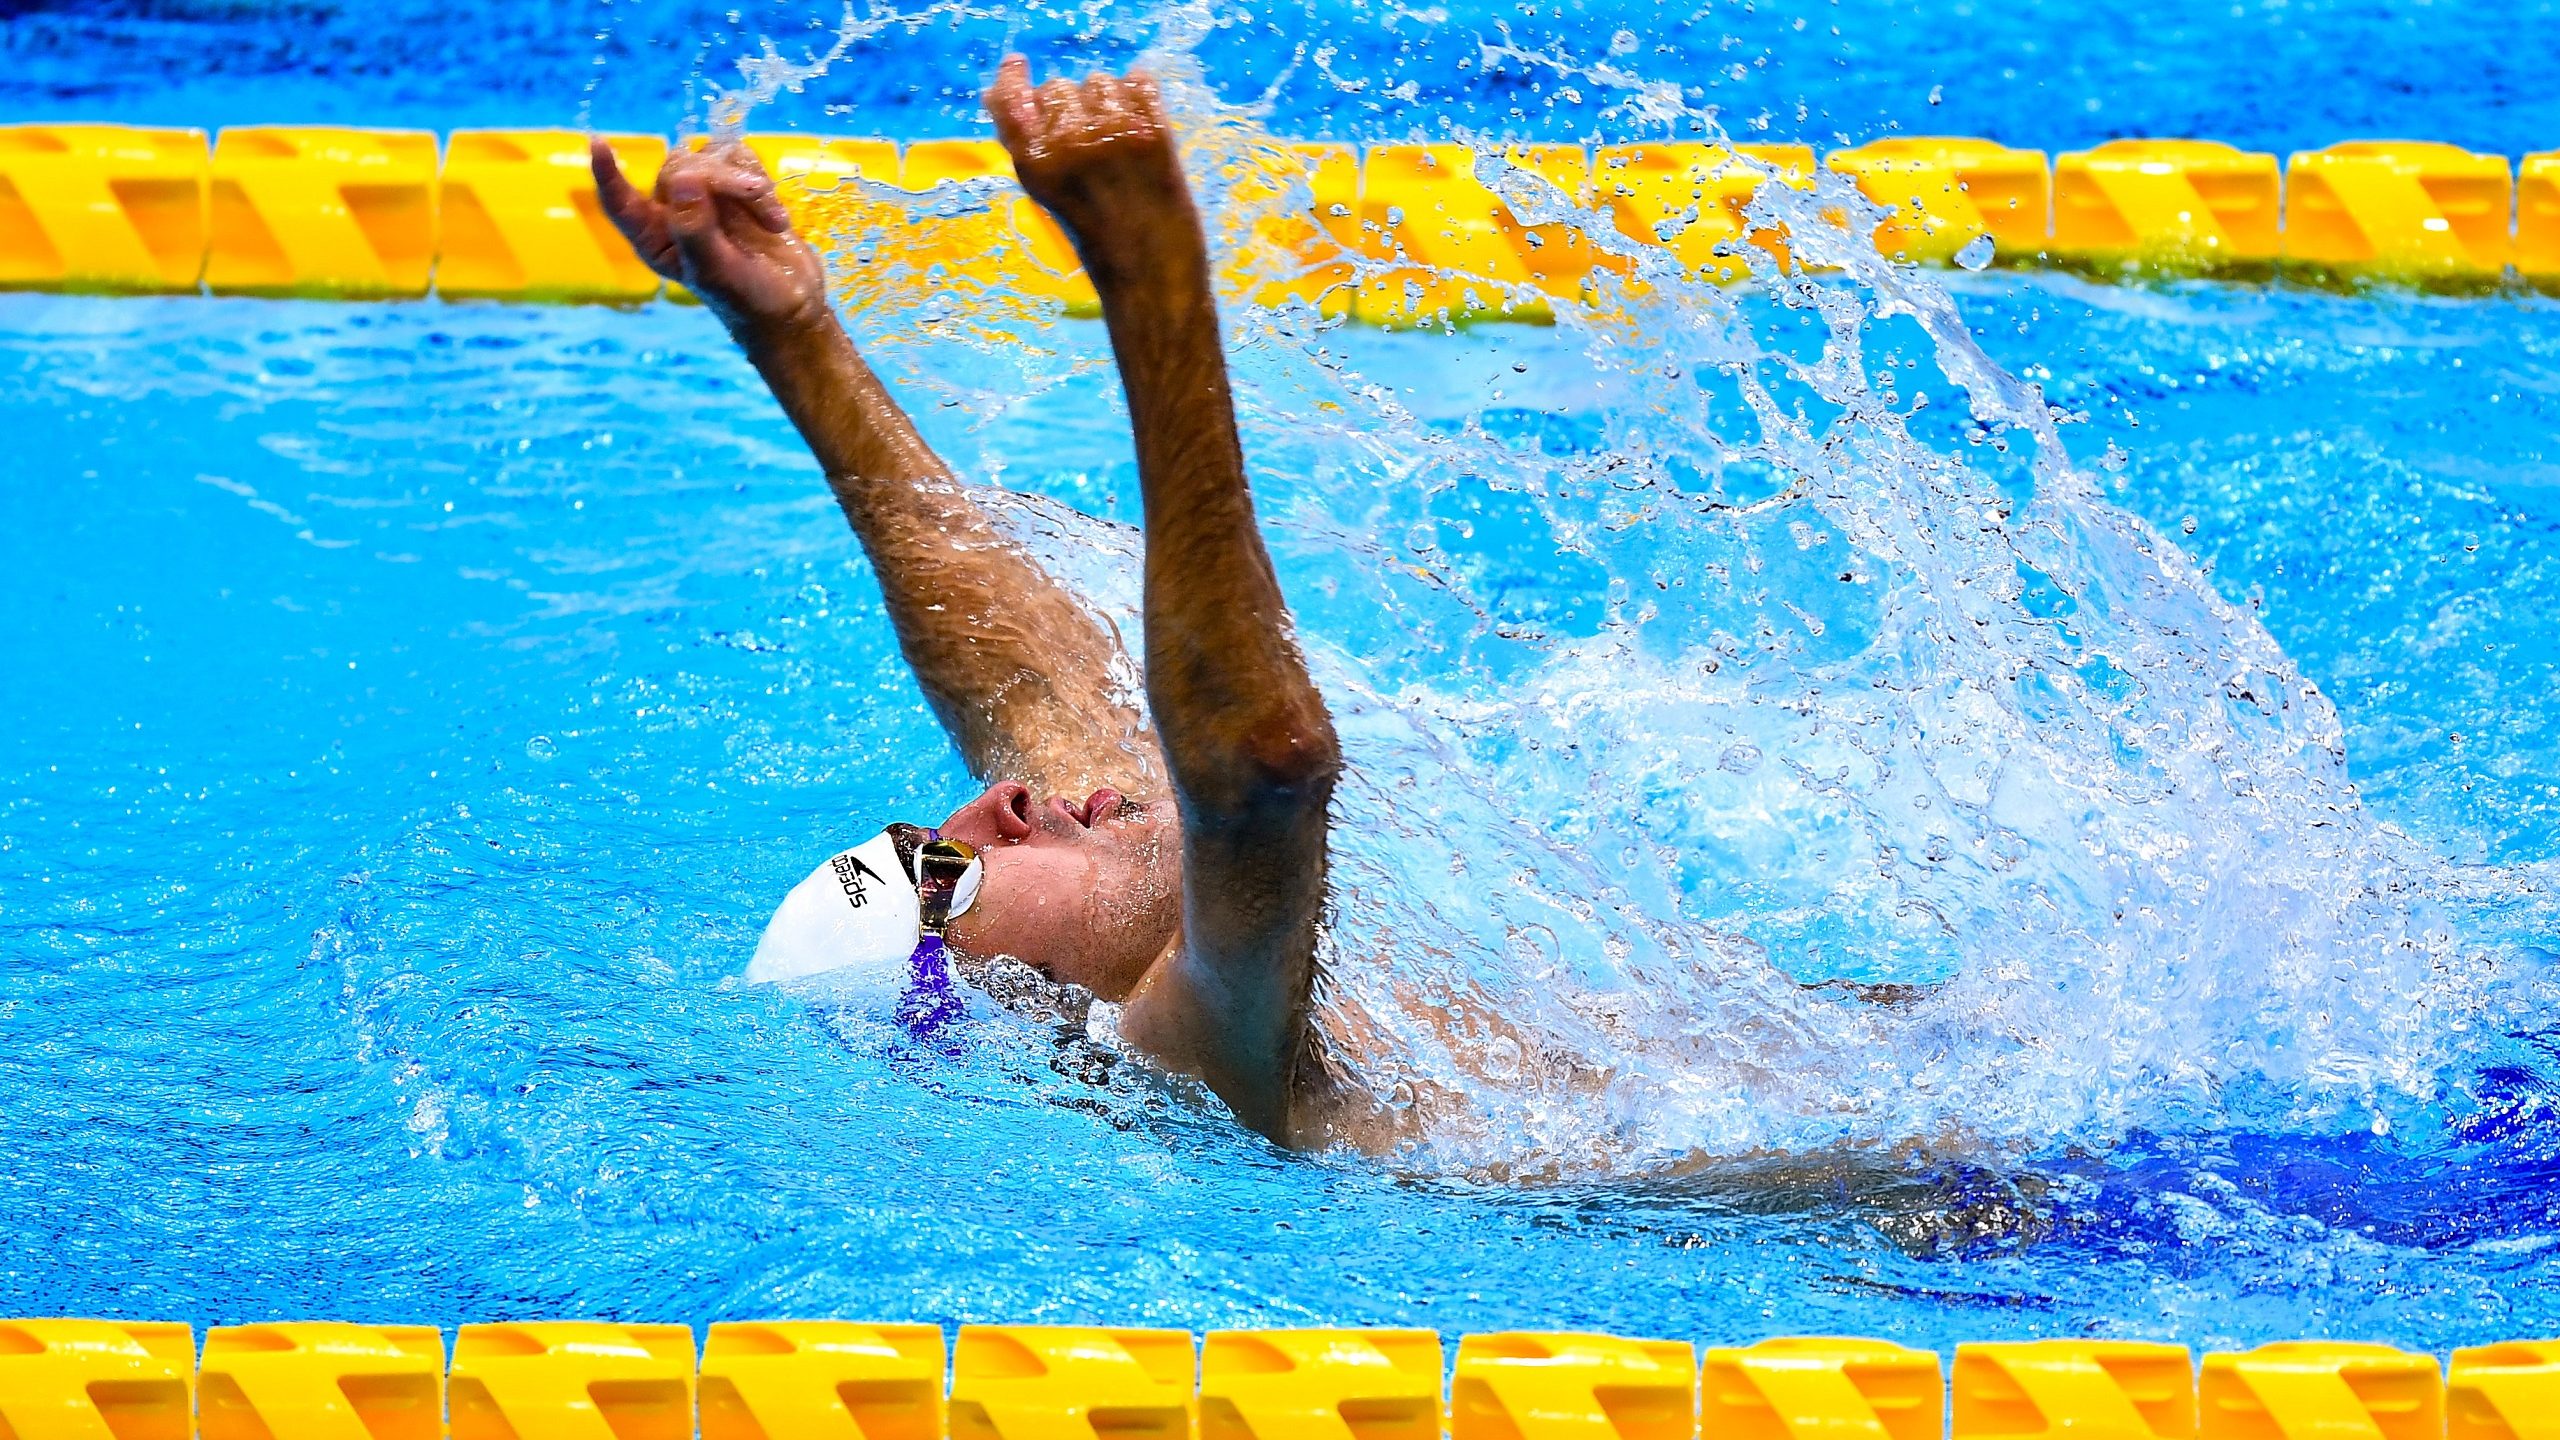 Arab Israeli Swimmer Iyad Shalabi Wins Gold in Tokyo Paralympics